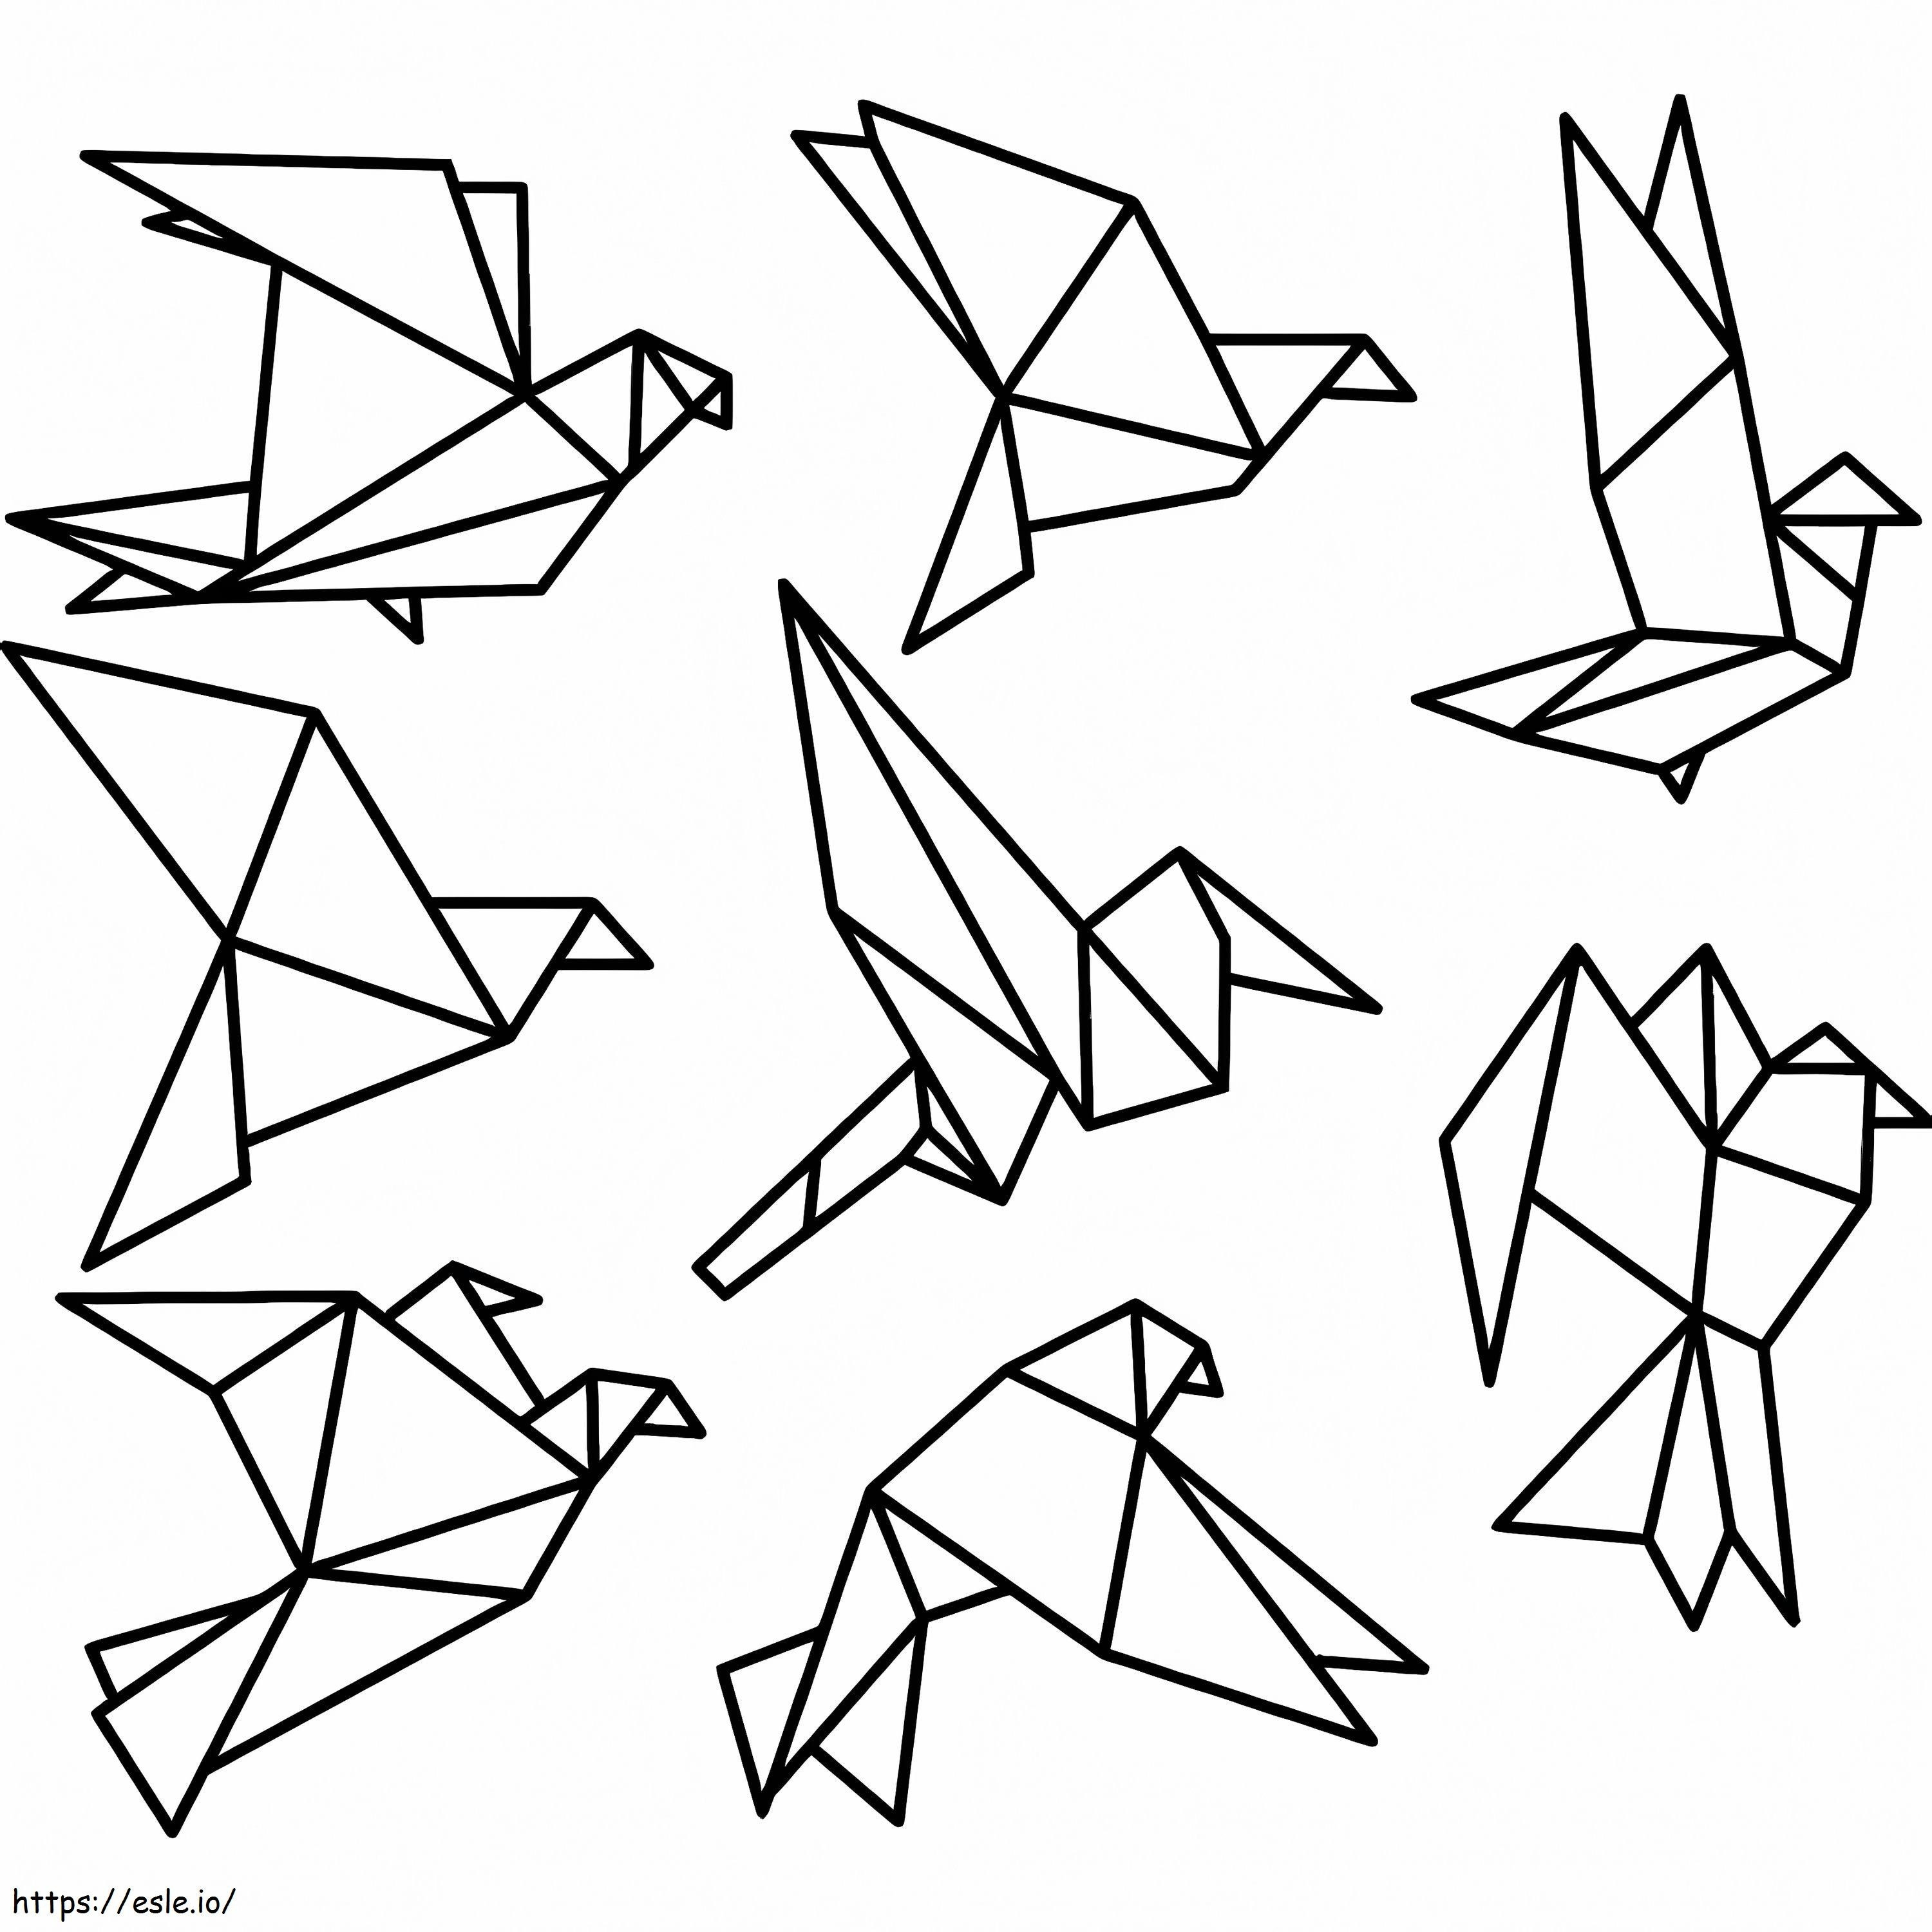 Origami-Vögel ausmalbilder